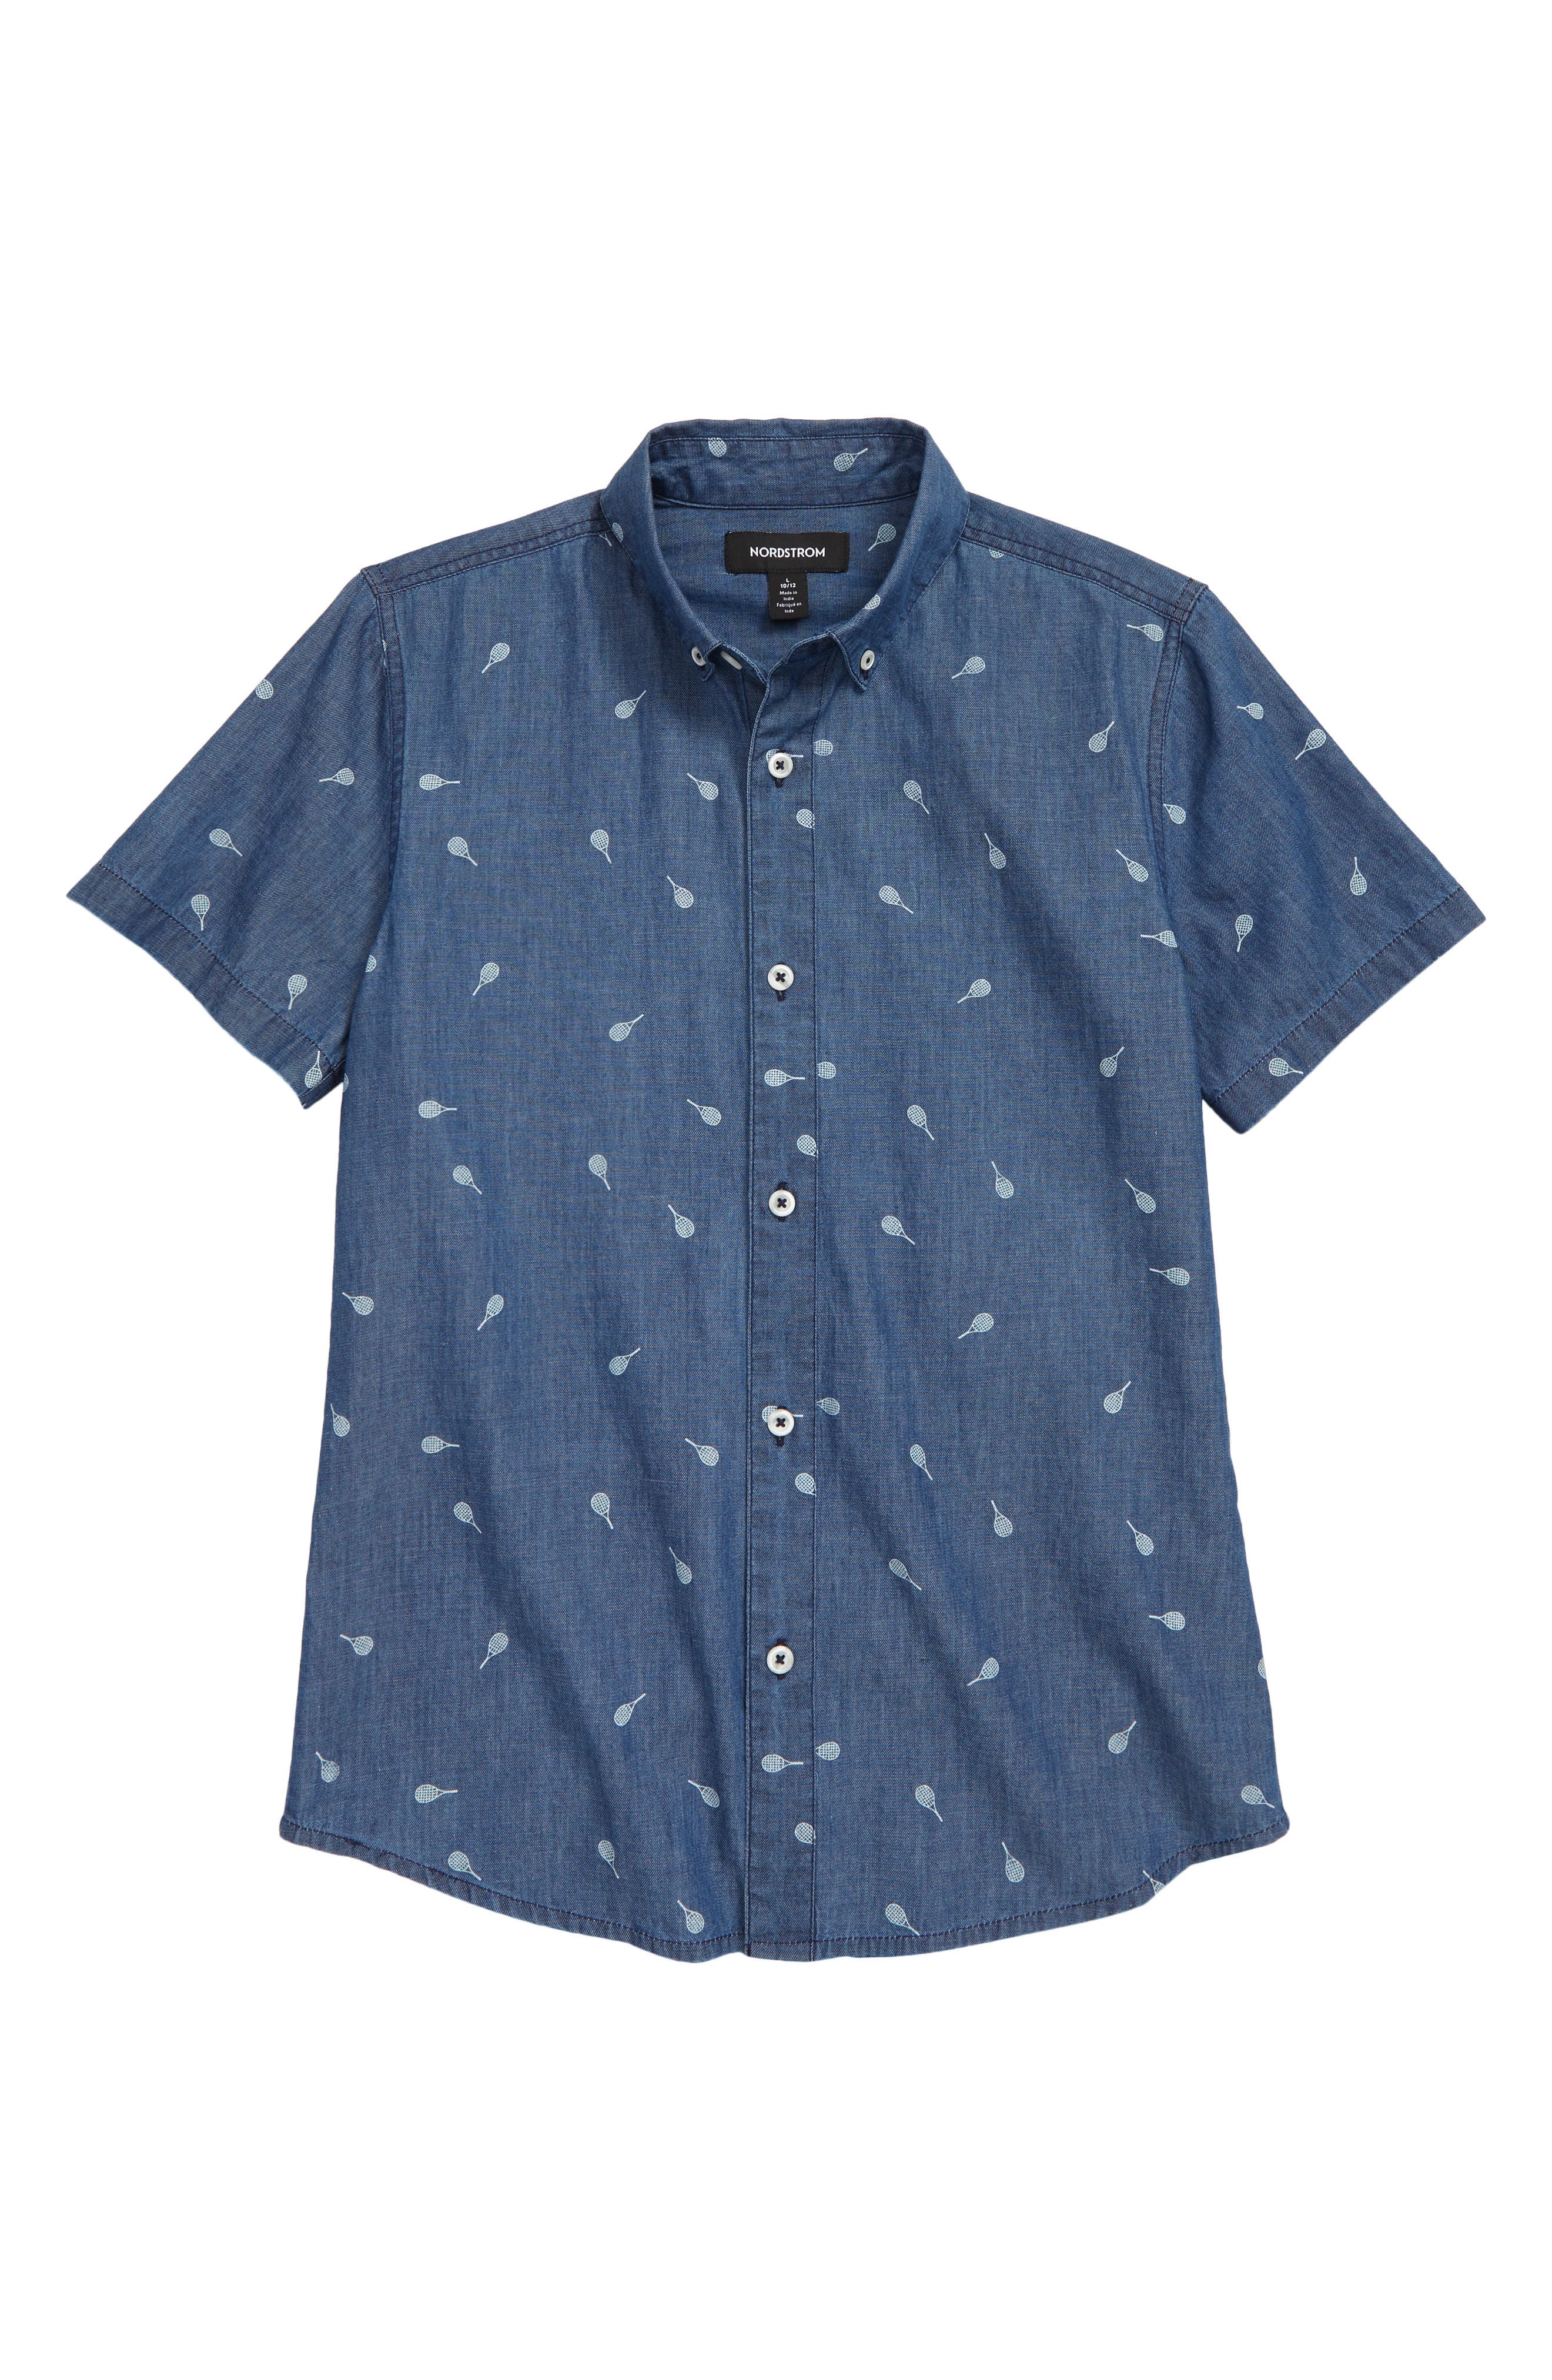 NEW Boys Short Sleeves Shirt Kids Formal Shirt Cotton Size 000-6 Blue Stripes 